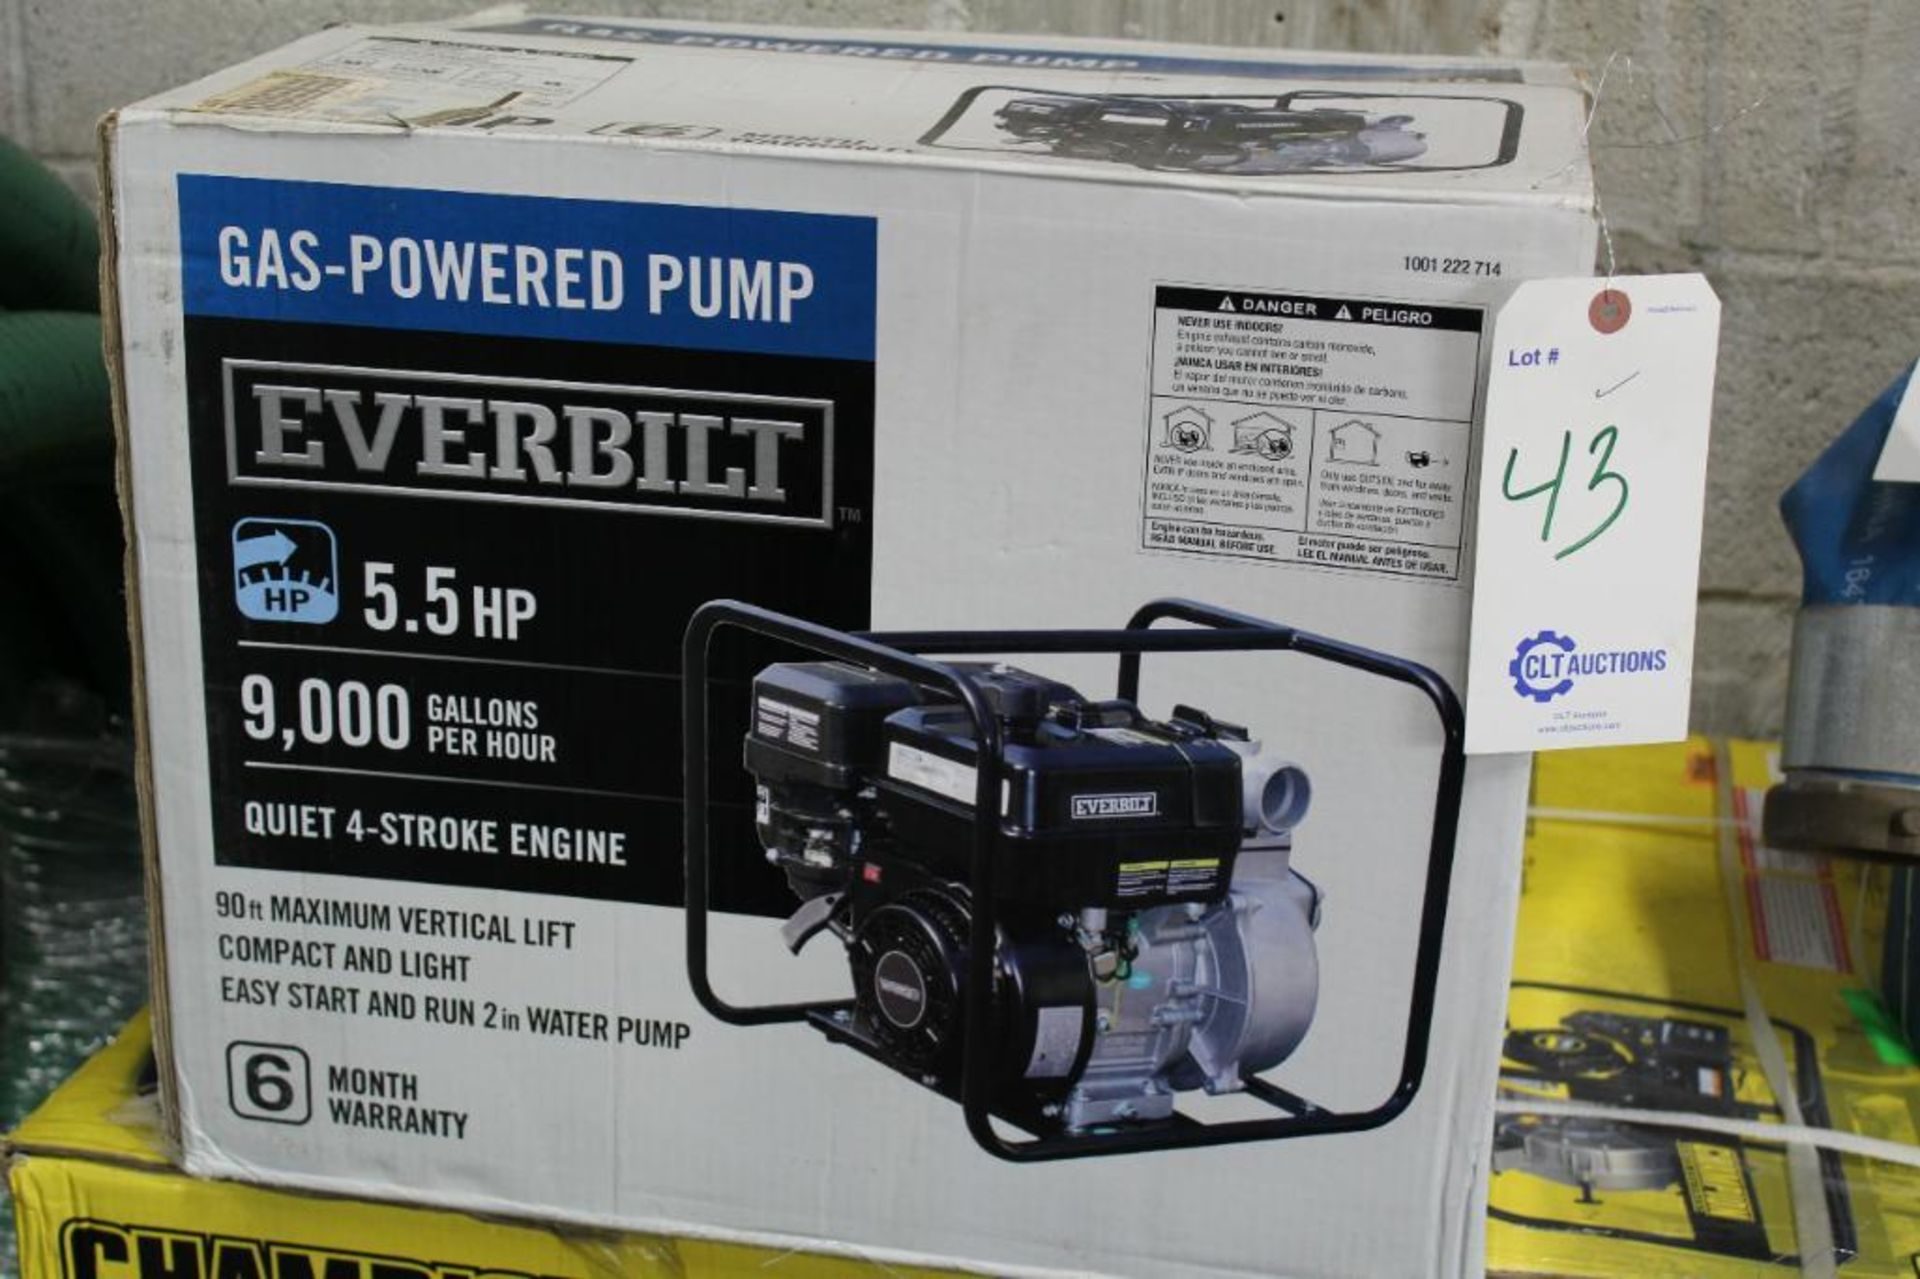 Everbuilt 5.5 hp water pump 9000 GPH, gas powered